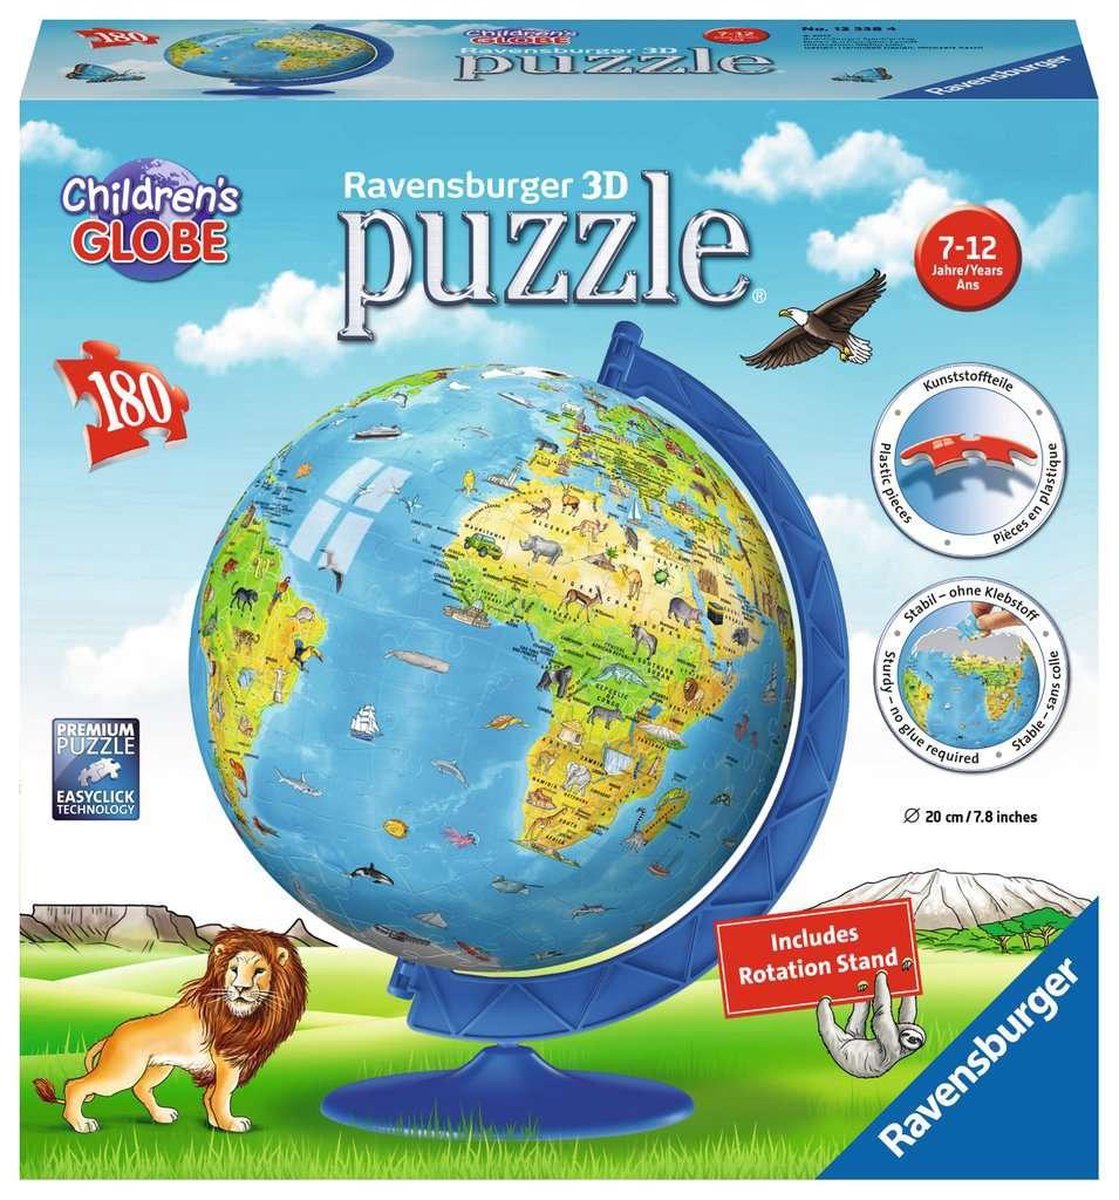 3D Puzzel Globe Engelstalig, 180 stukjes